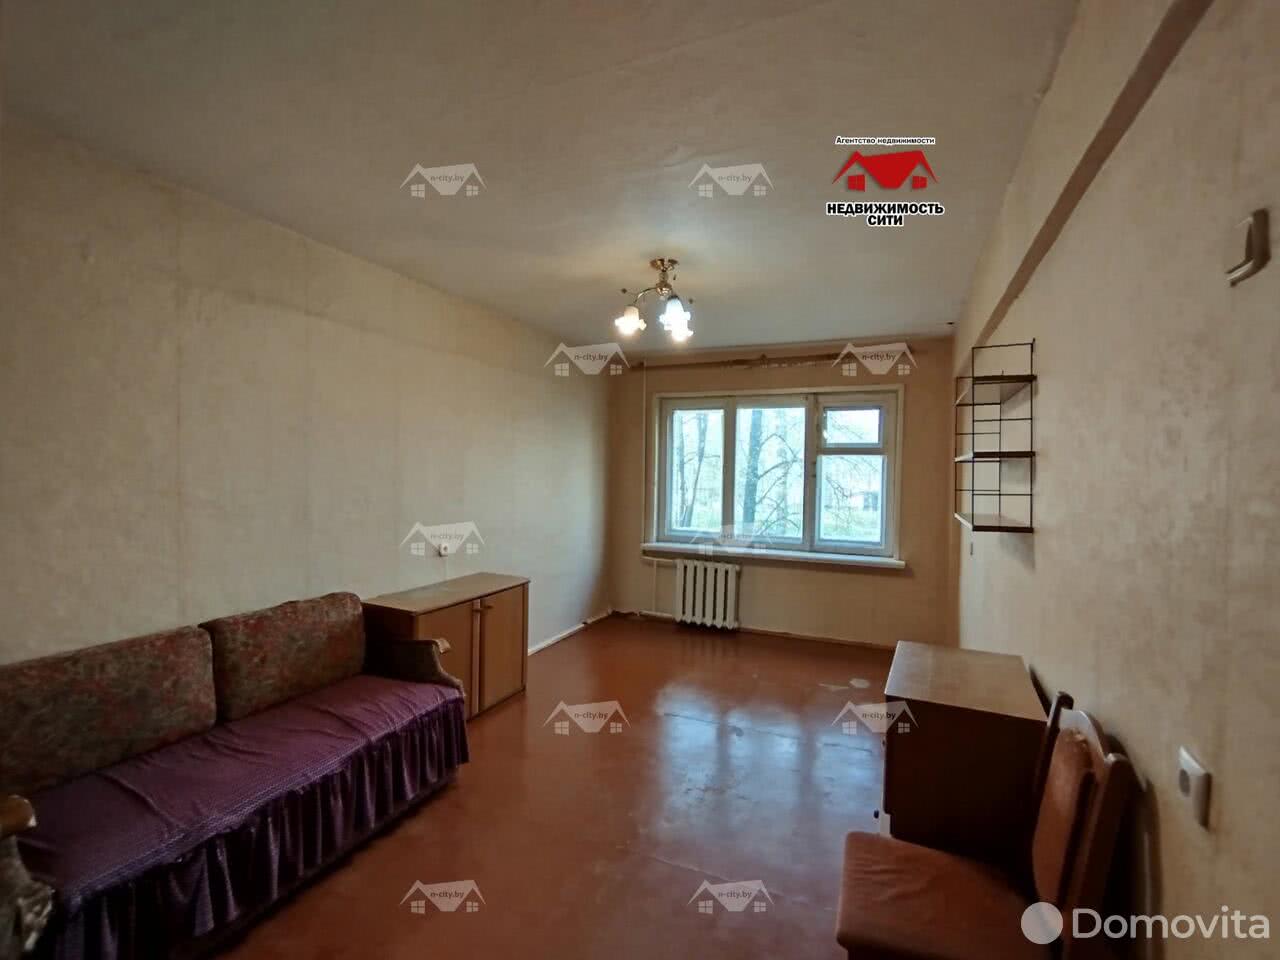 Цена продажи квартиры, Могилев, ул. Королева, д. 35